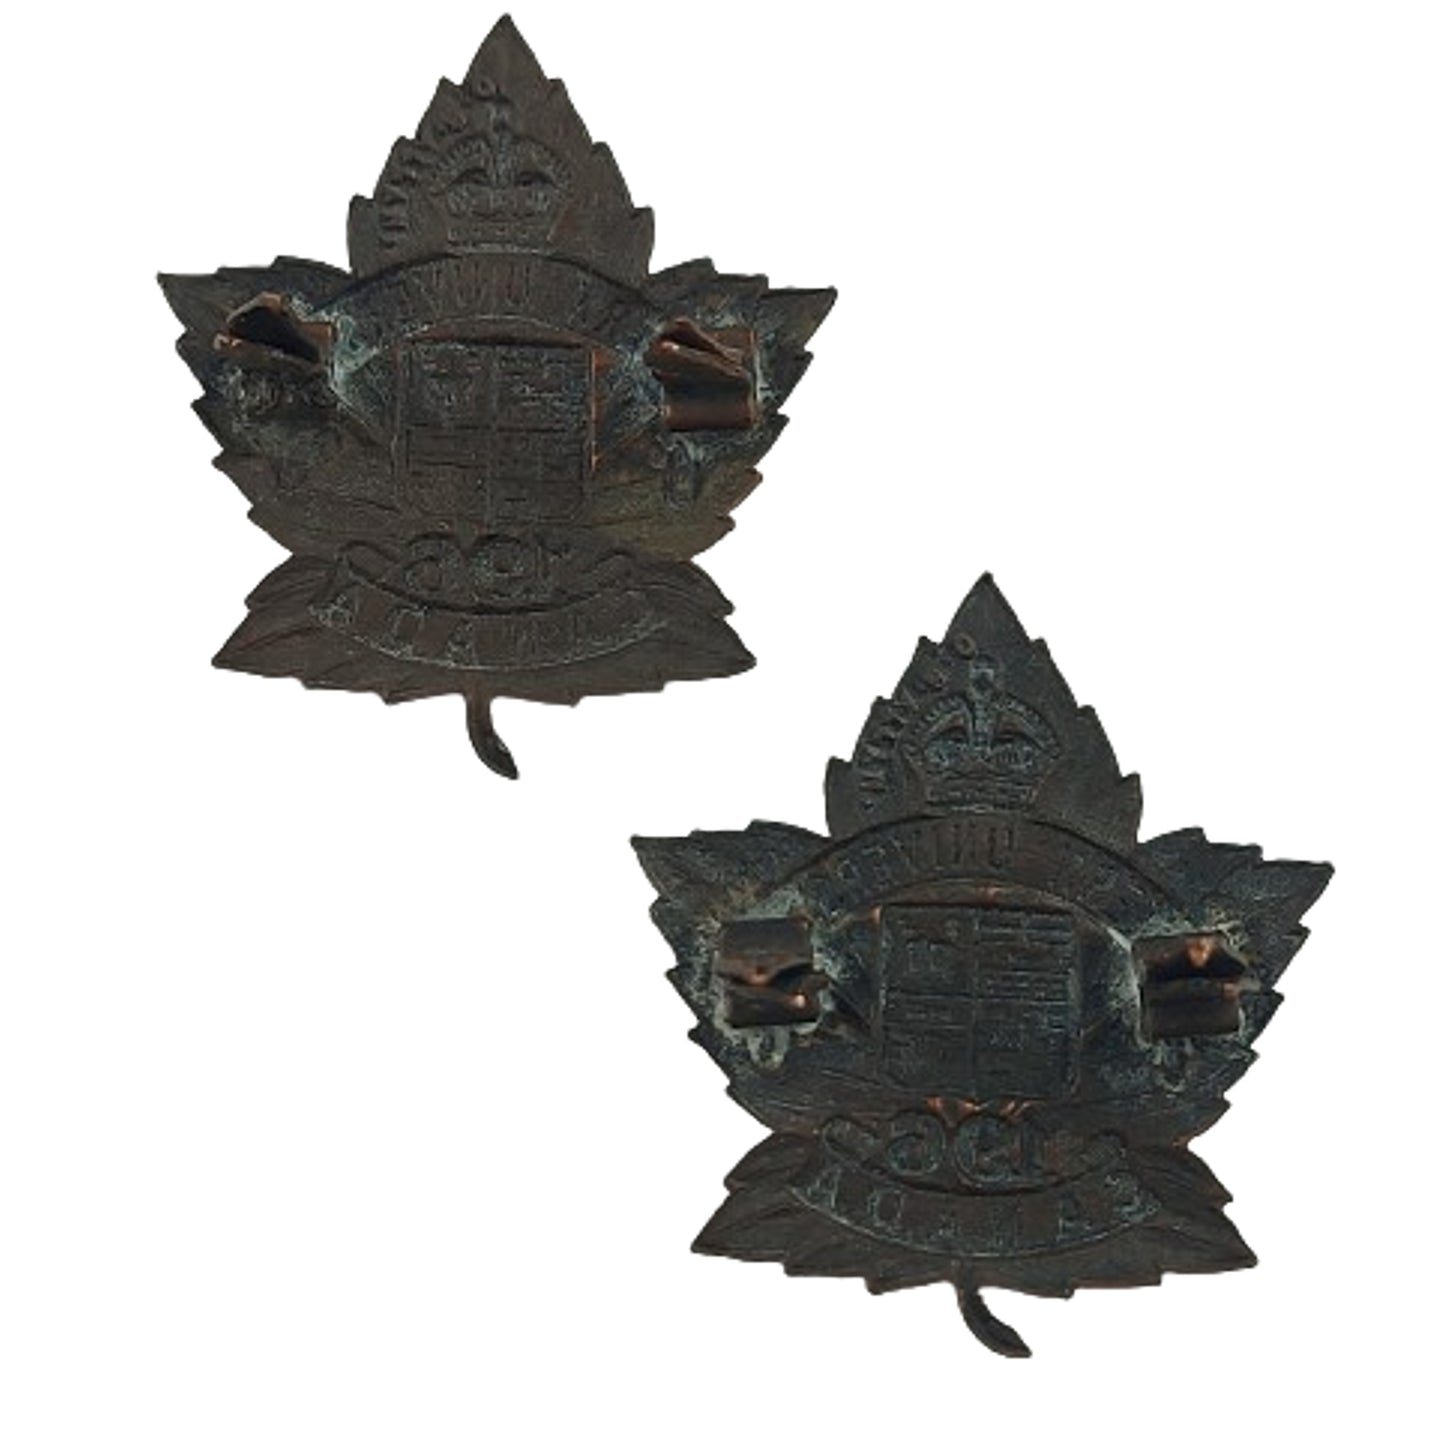 WW1 Canadian CEF 196th Battalion Collar Badge Pair -Western University